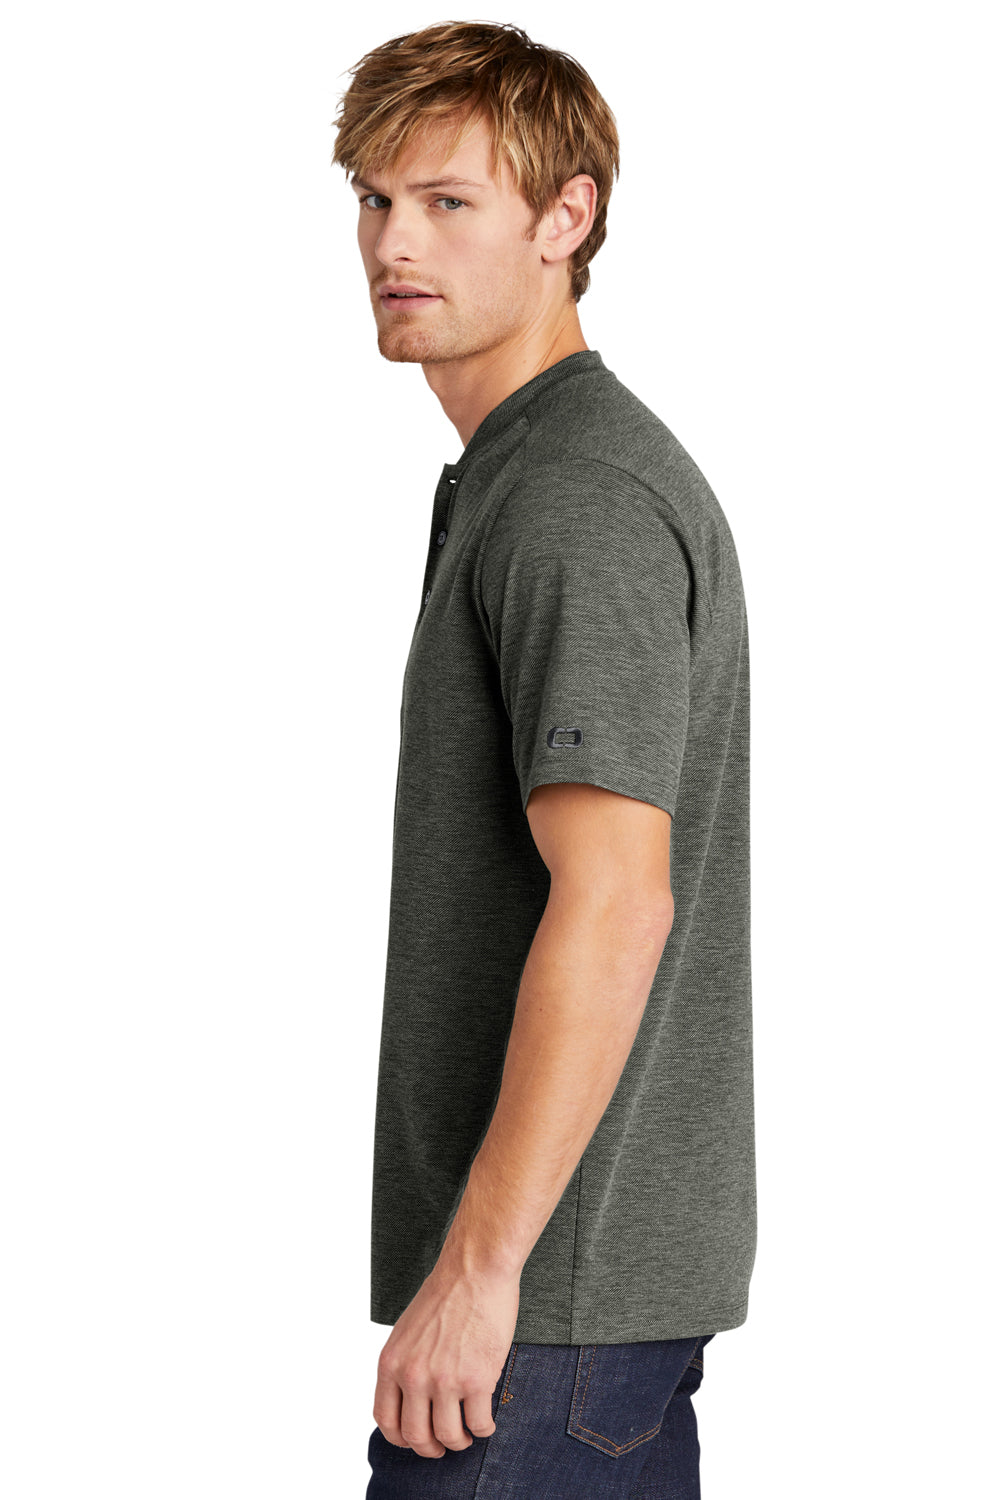 Ogio OG148 Evolution Short Sleeve Henley T-Shirt Tarmac Grey Side